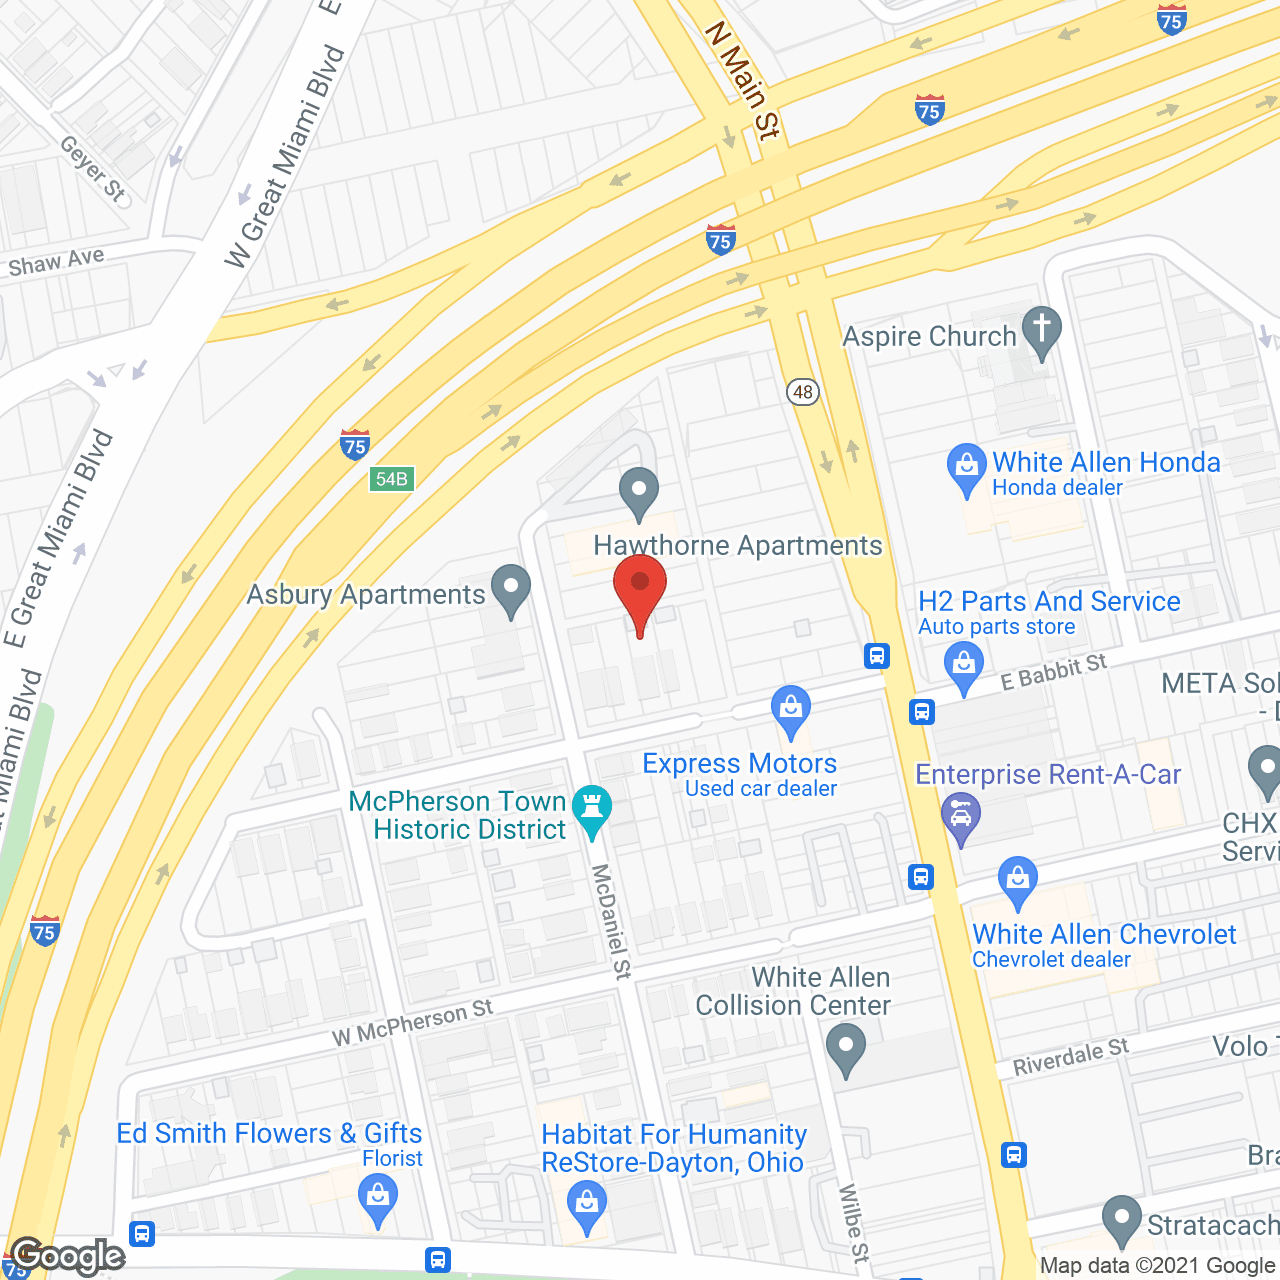 Asbury Apartments in google map